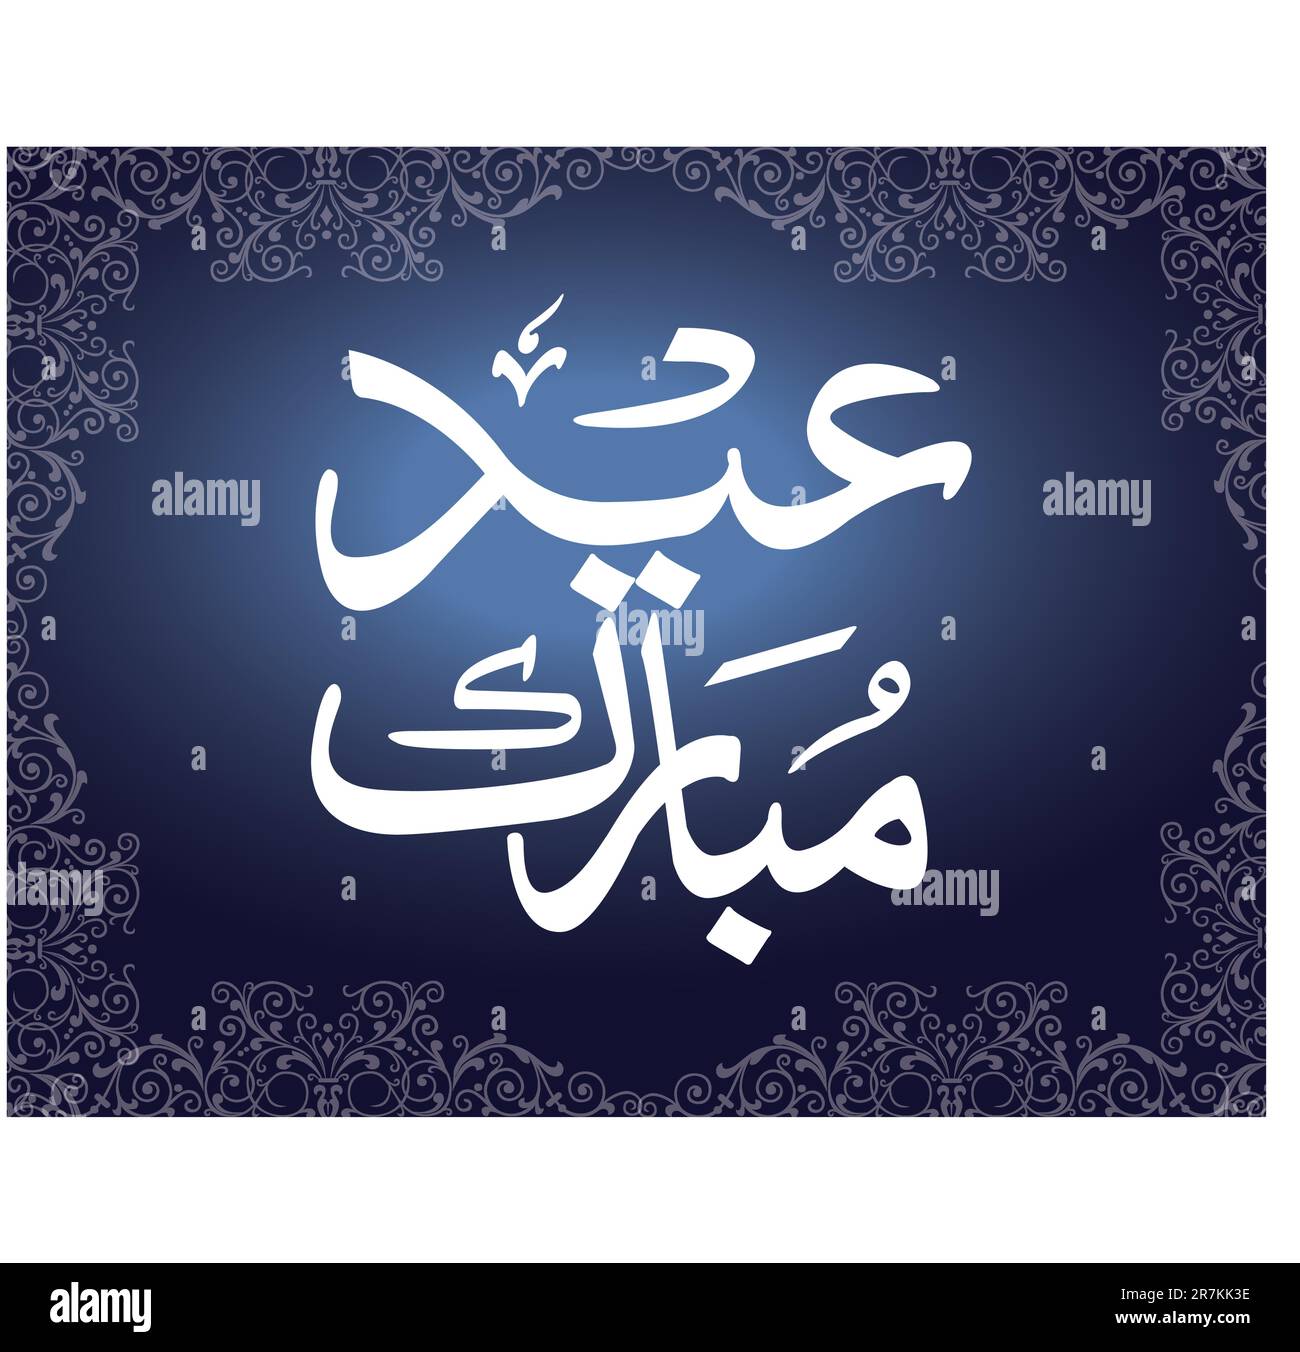 eid mubarak written in arabic/urdu/persian script Stock Vector